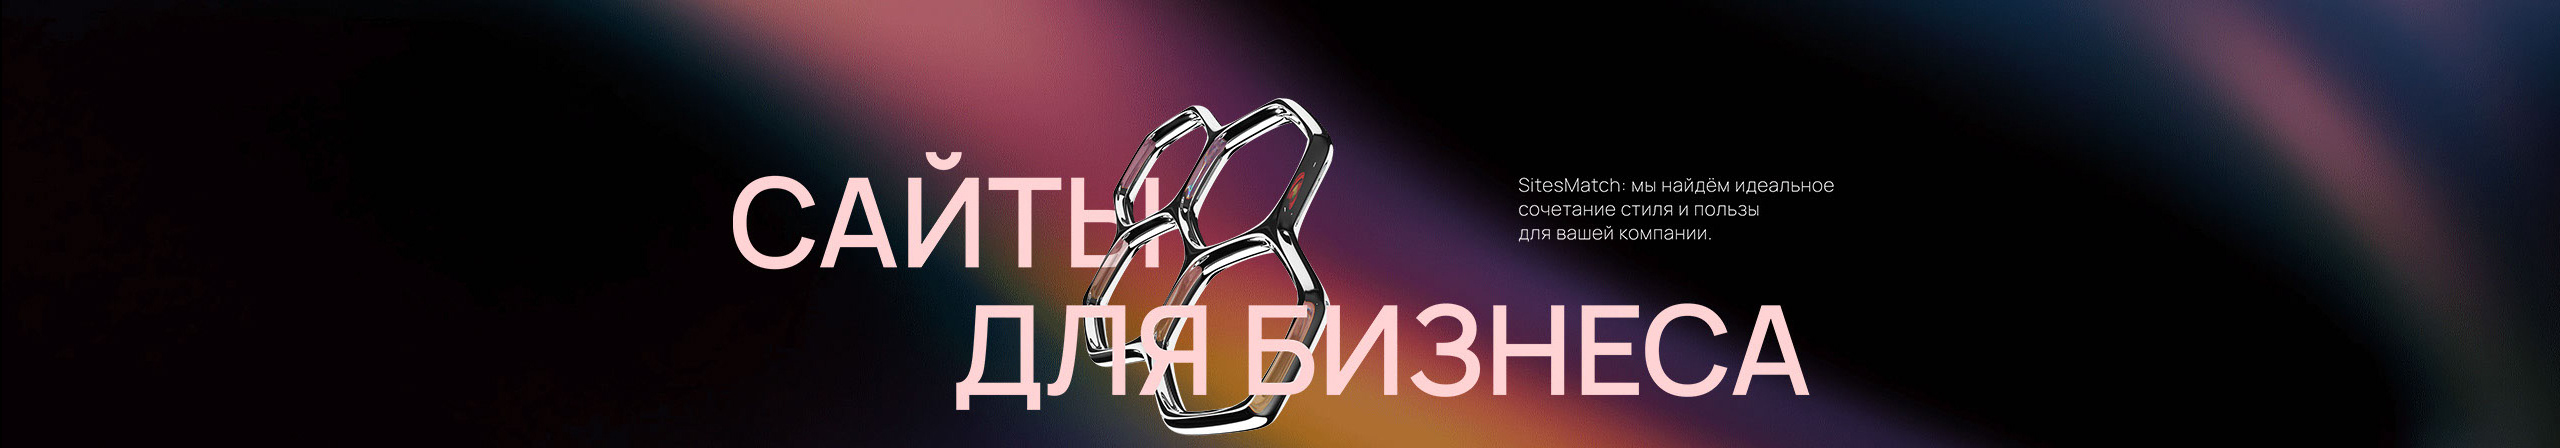 Banner del profilo di Илья Черняев